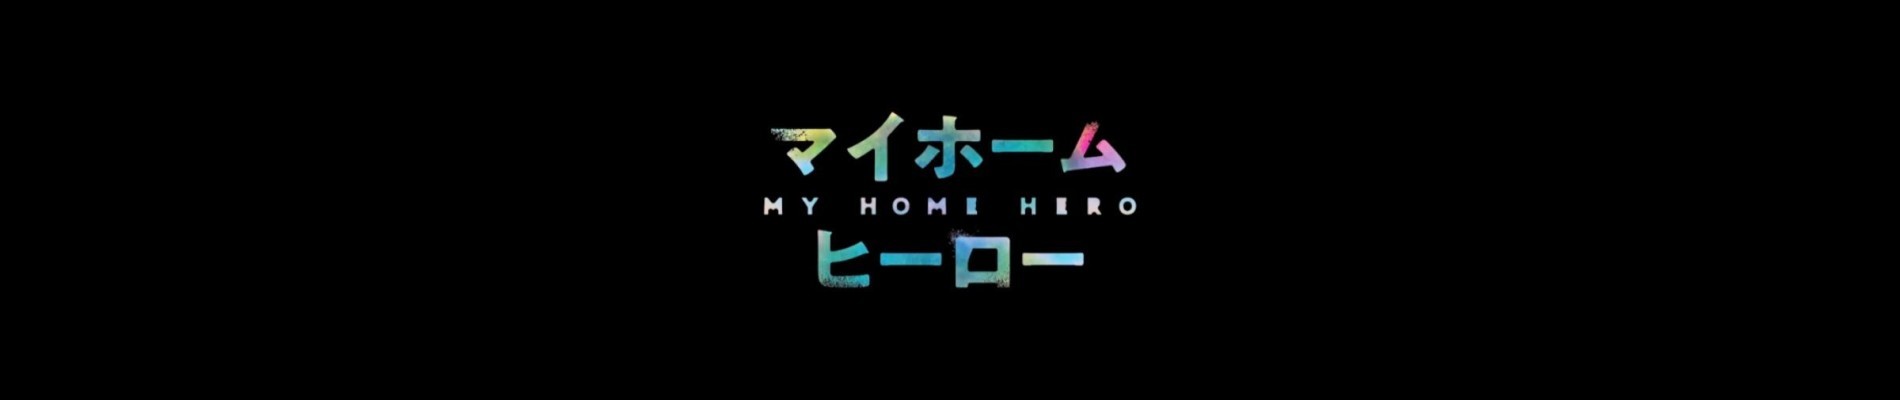 My Home Hero · AniList